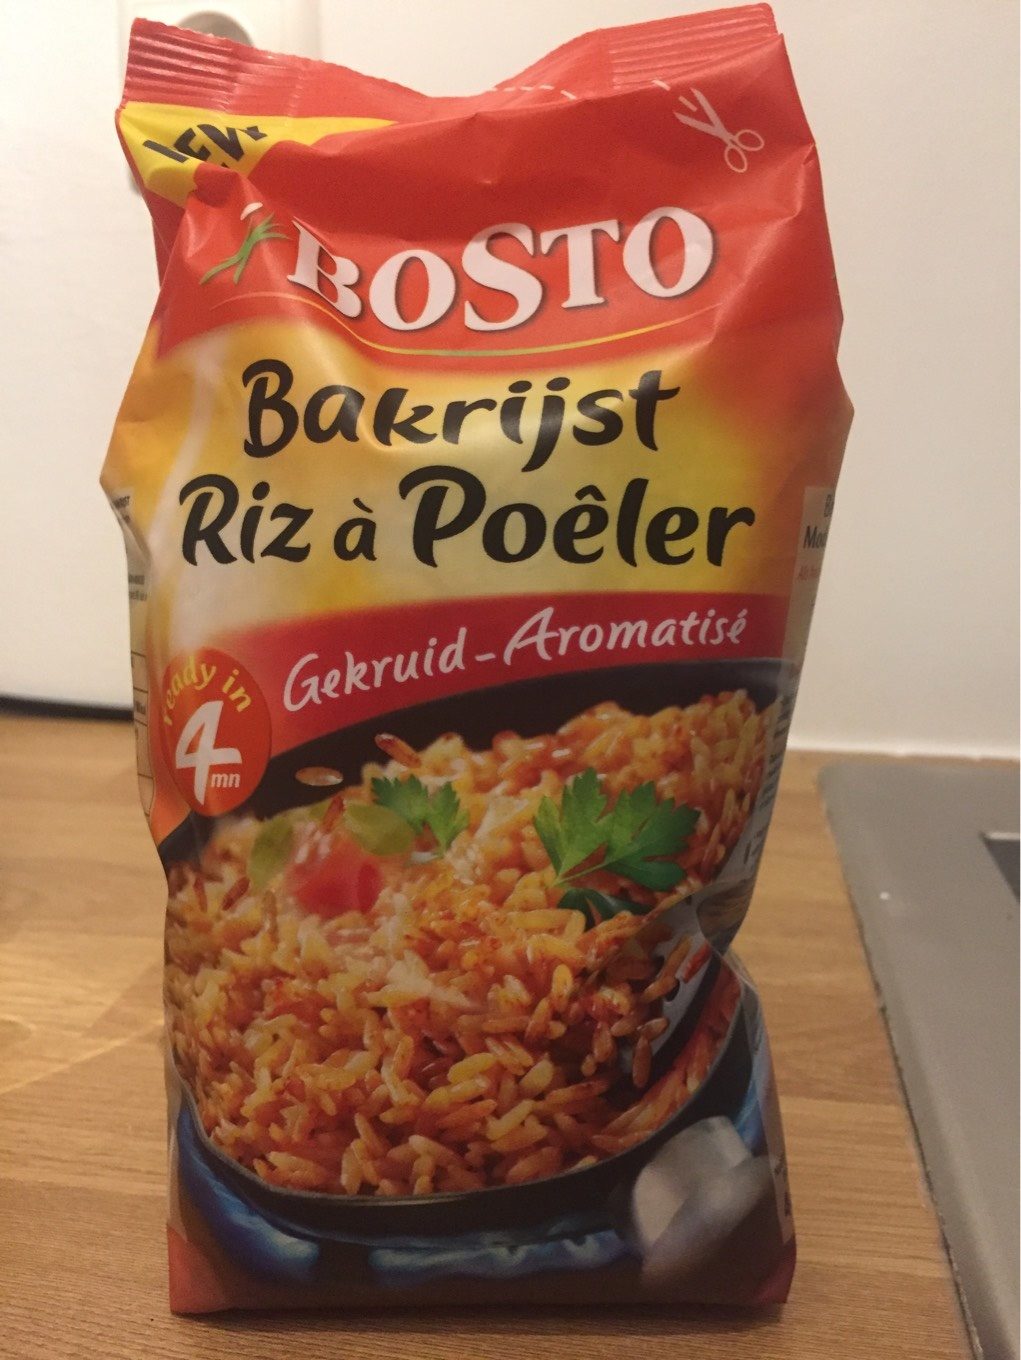 Riz a poeler aromatisé - Product - fr